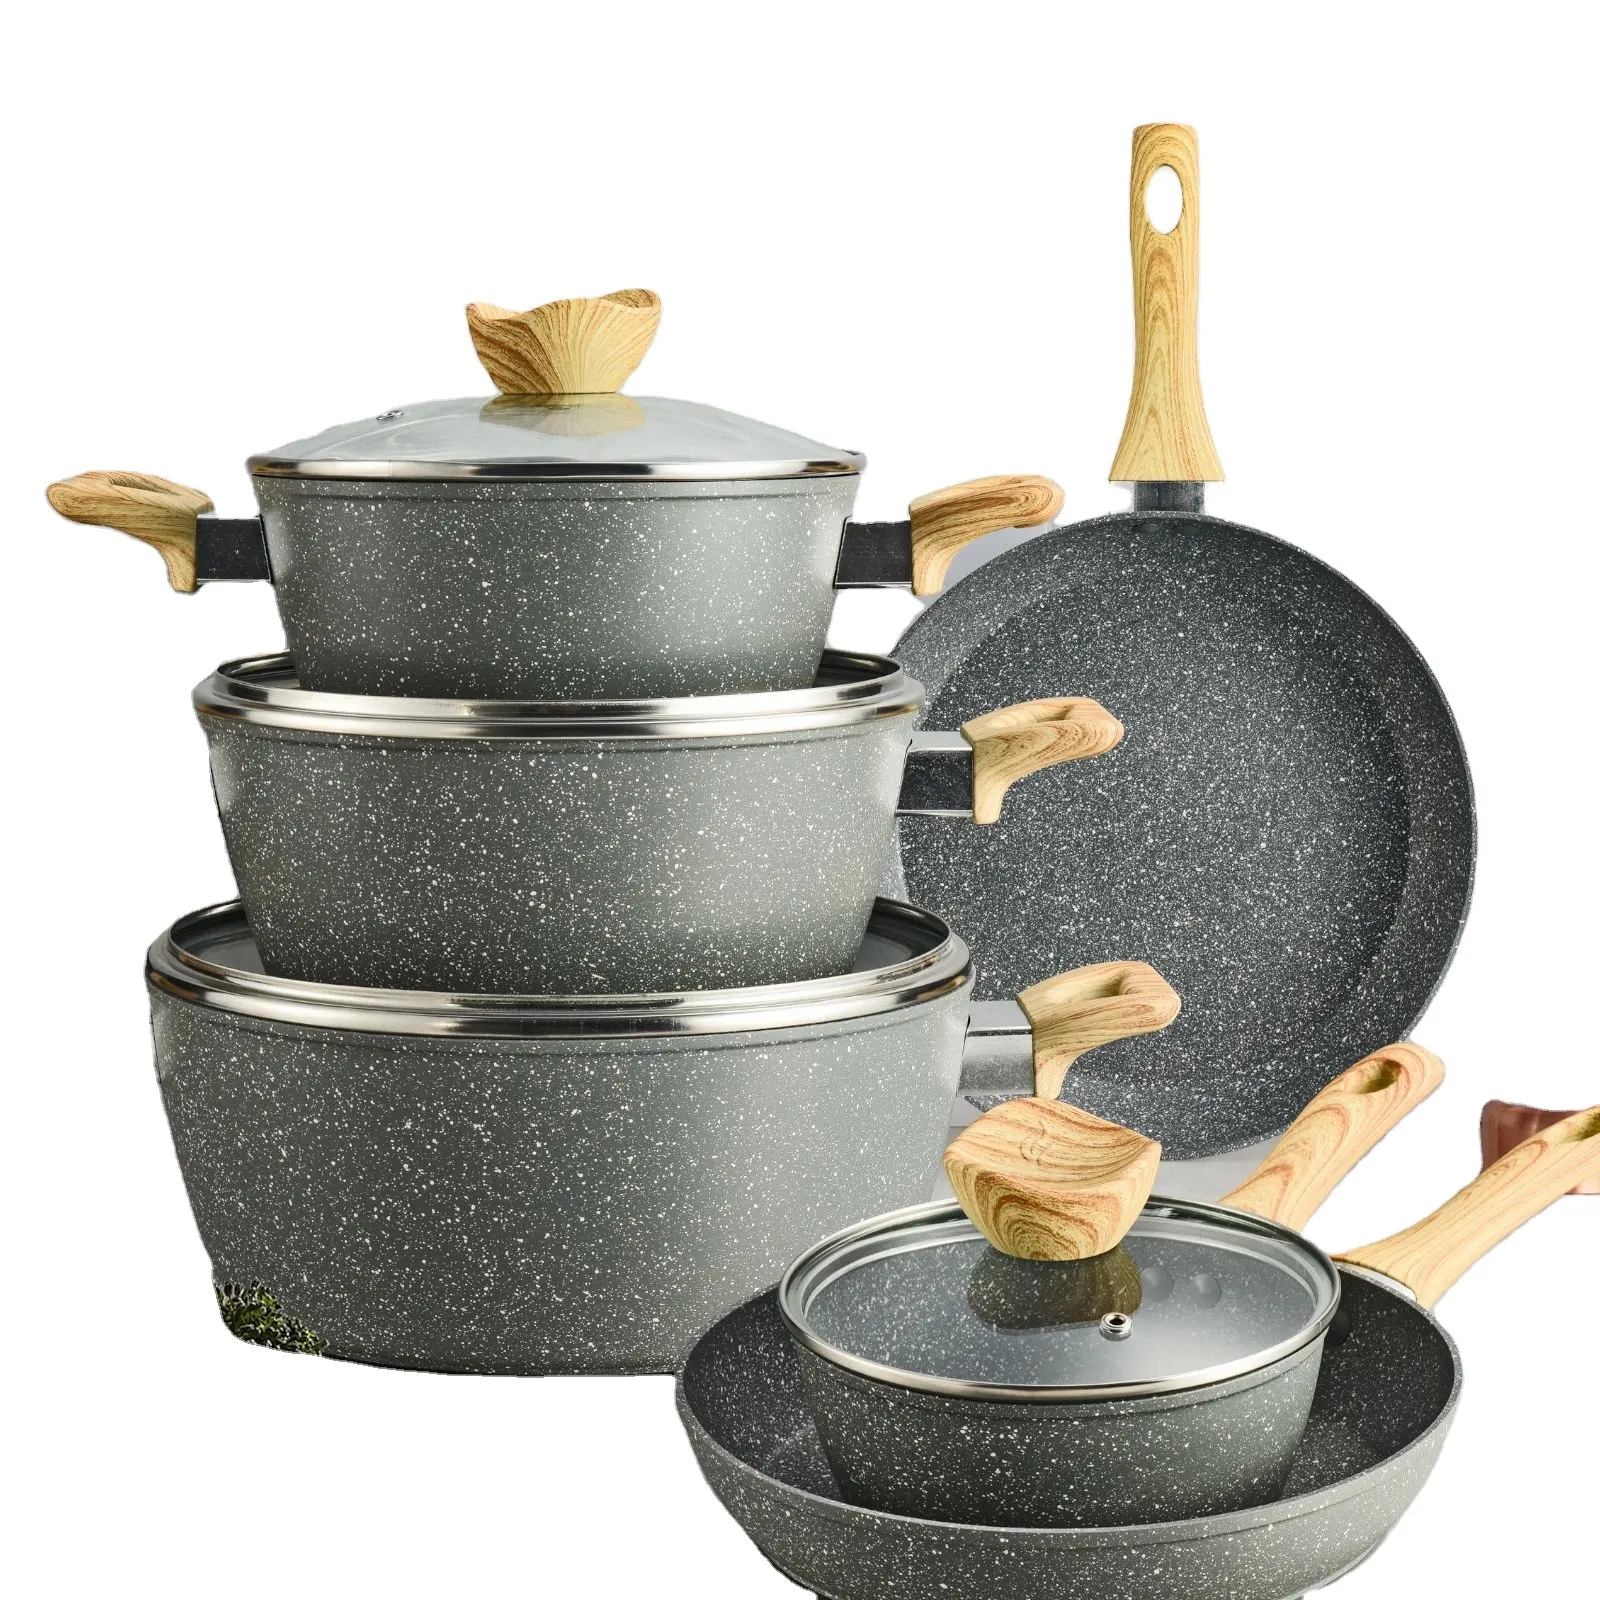 Granite Nonstick 10 Pieces Cookware Pots and Pans Set, PFAS-Free, Dishwasher Safe cooking pot